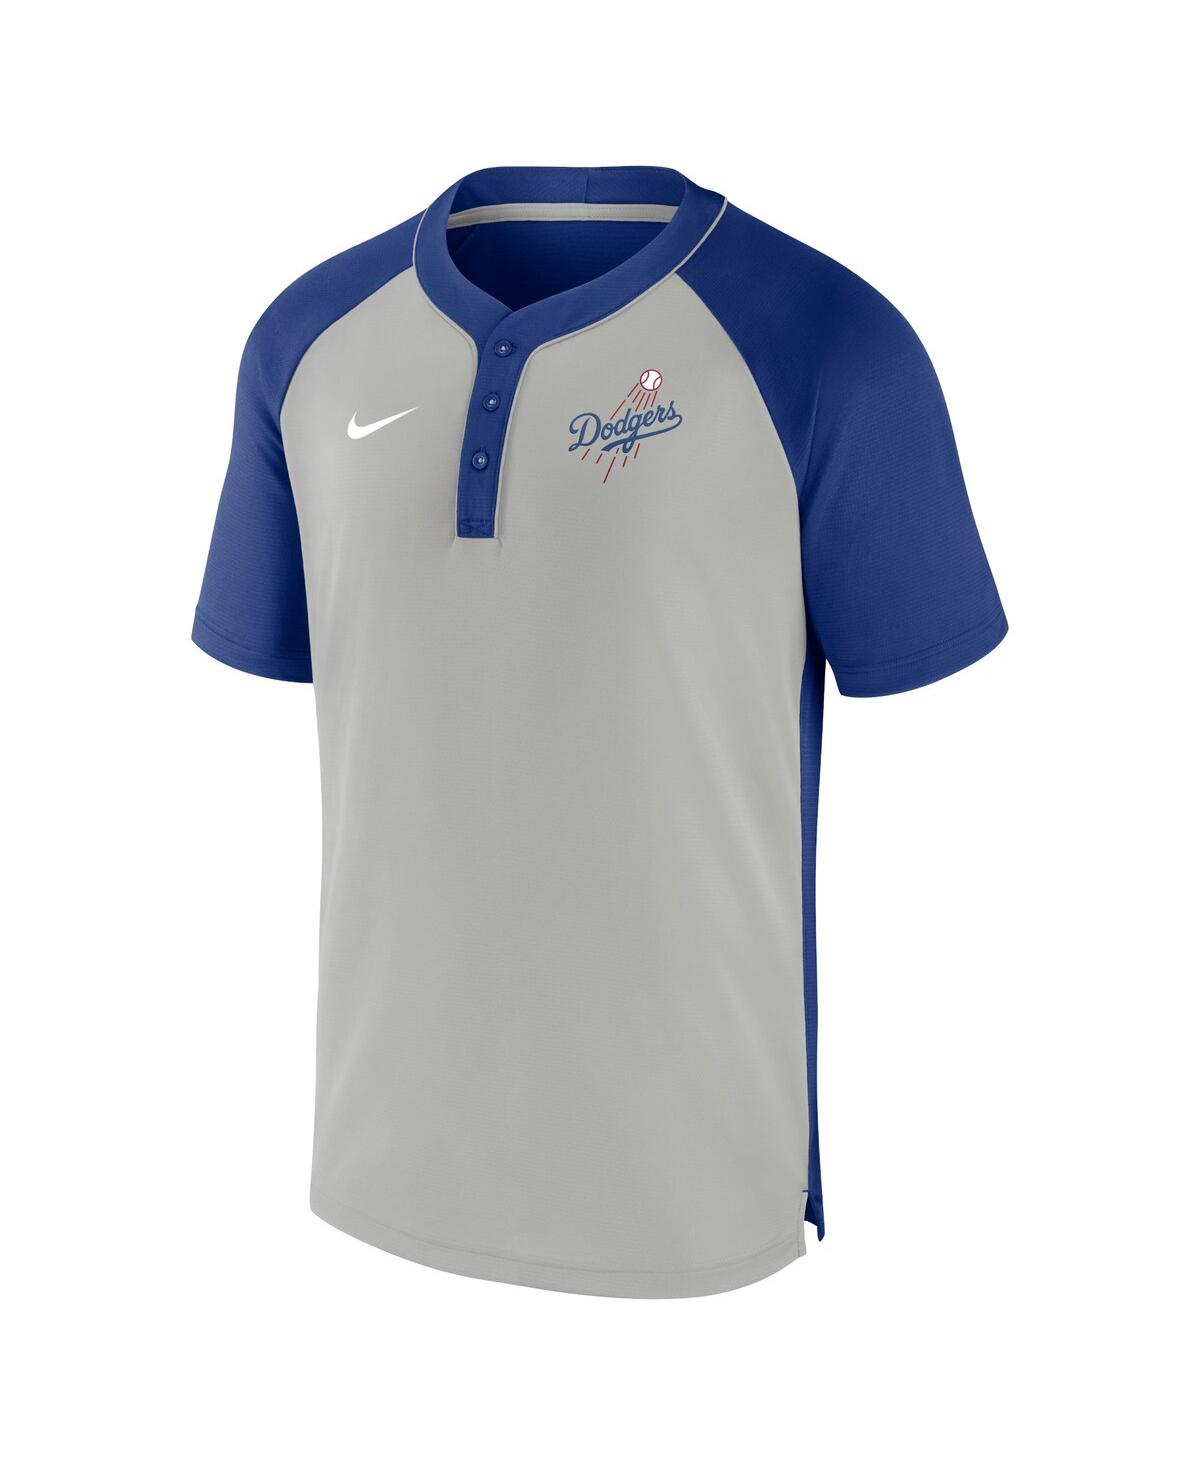 Men's Nike Royal/Silver Los Angeles Dodgers City Plate Performance Henley Raglan T-Shirt Size: Medium